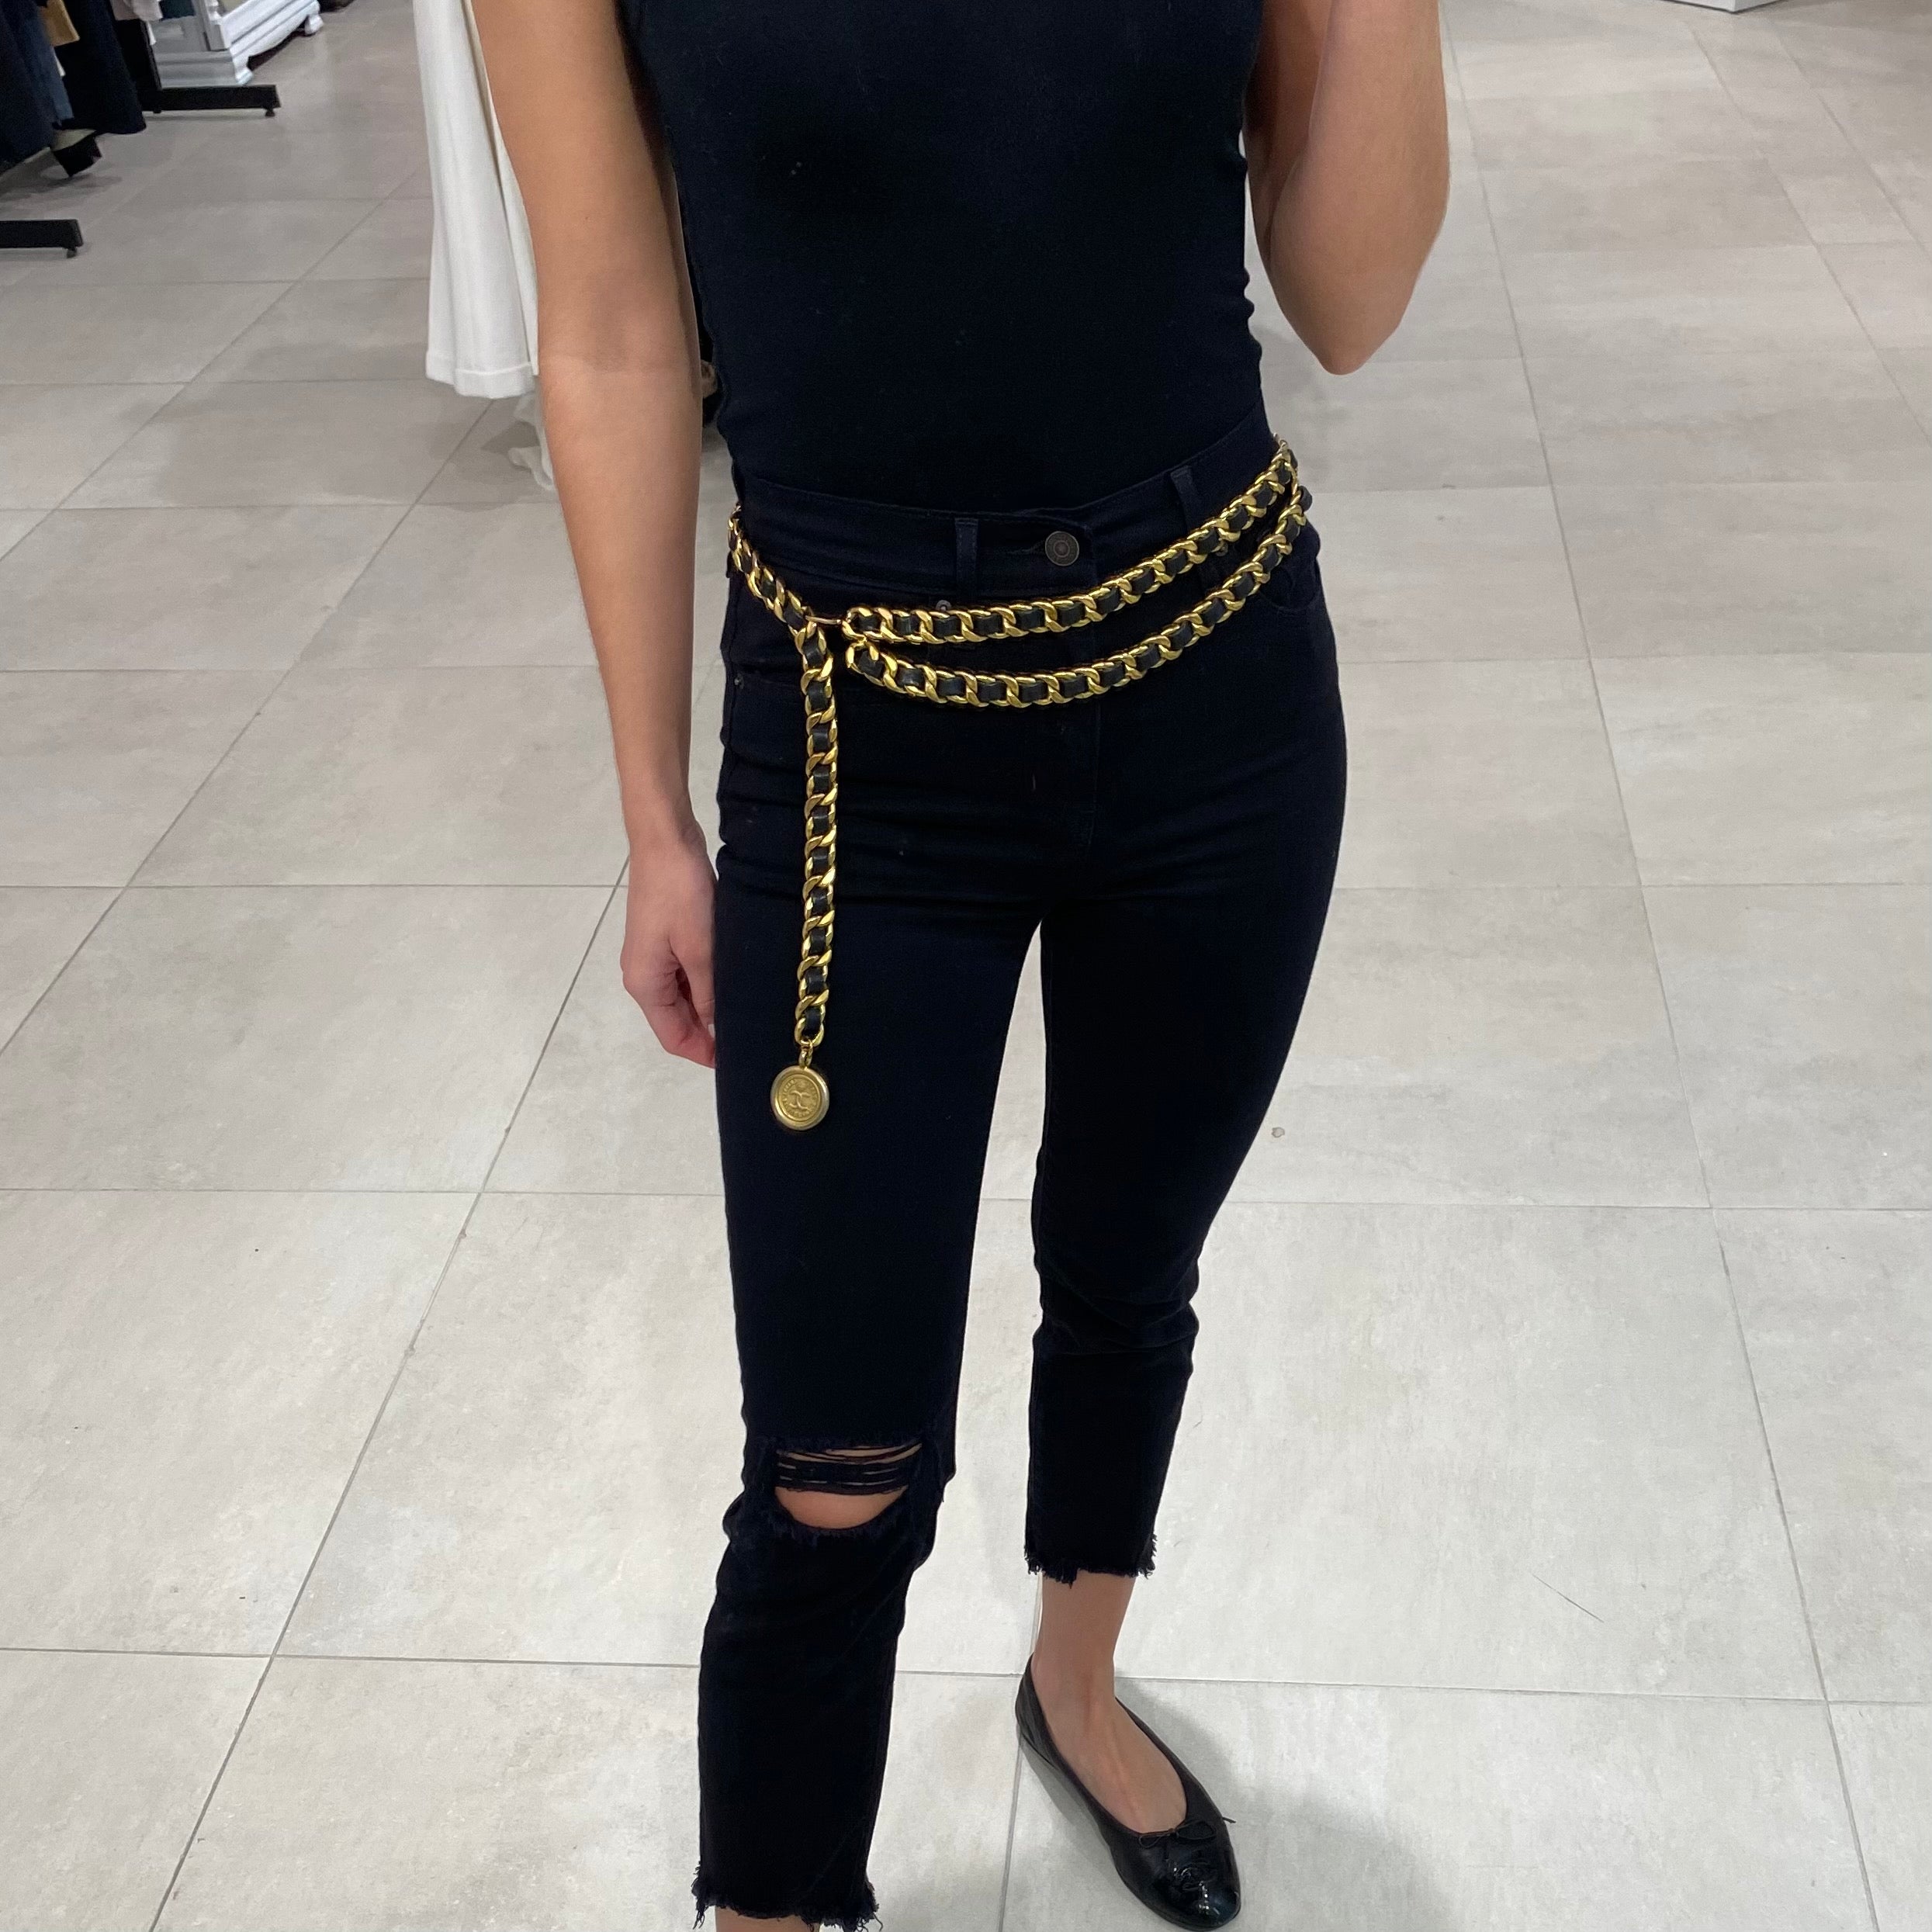 Chanel Black & Gold Chain Belt